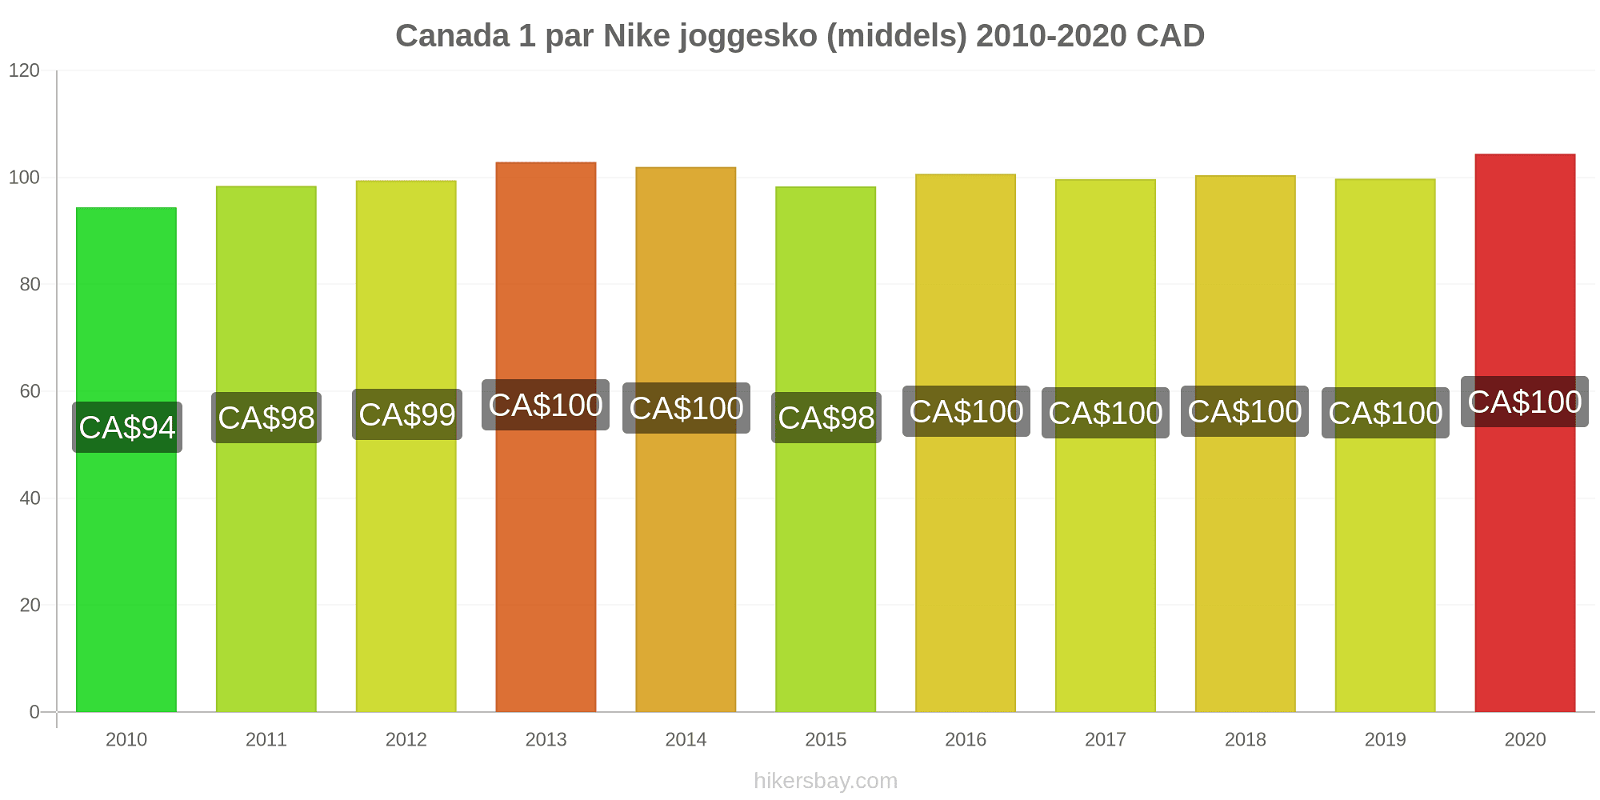 Canada prisendringer 1 par Nike joggesko (middels) hikersbay.com